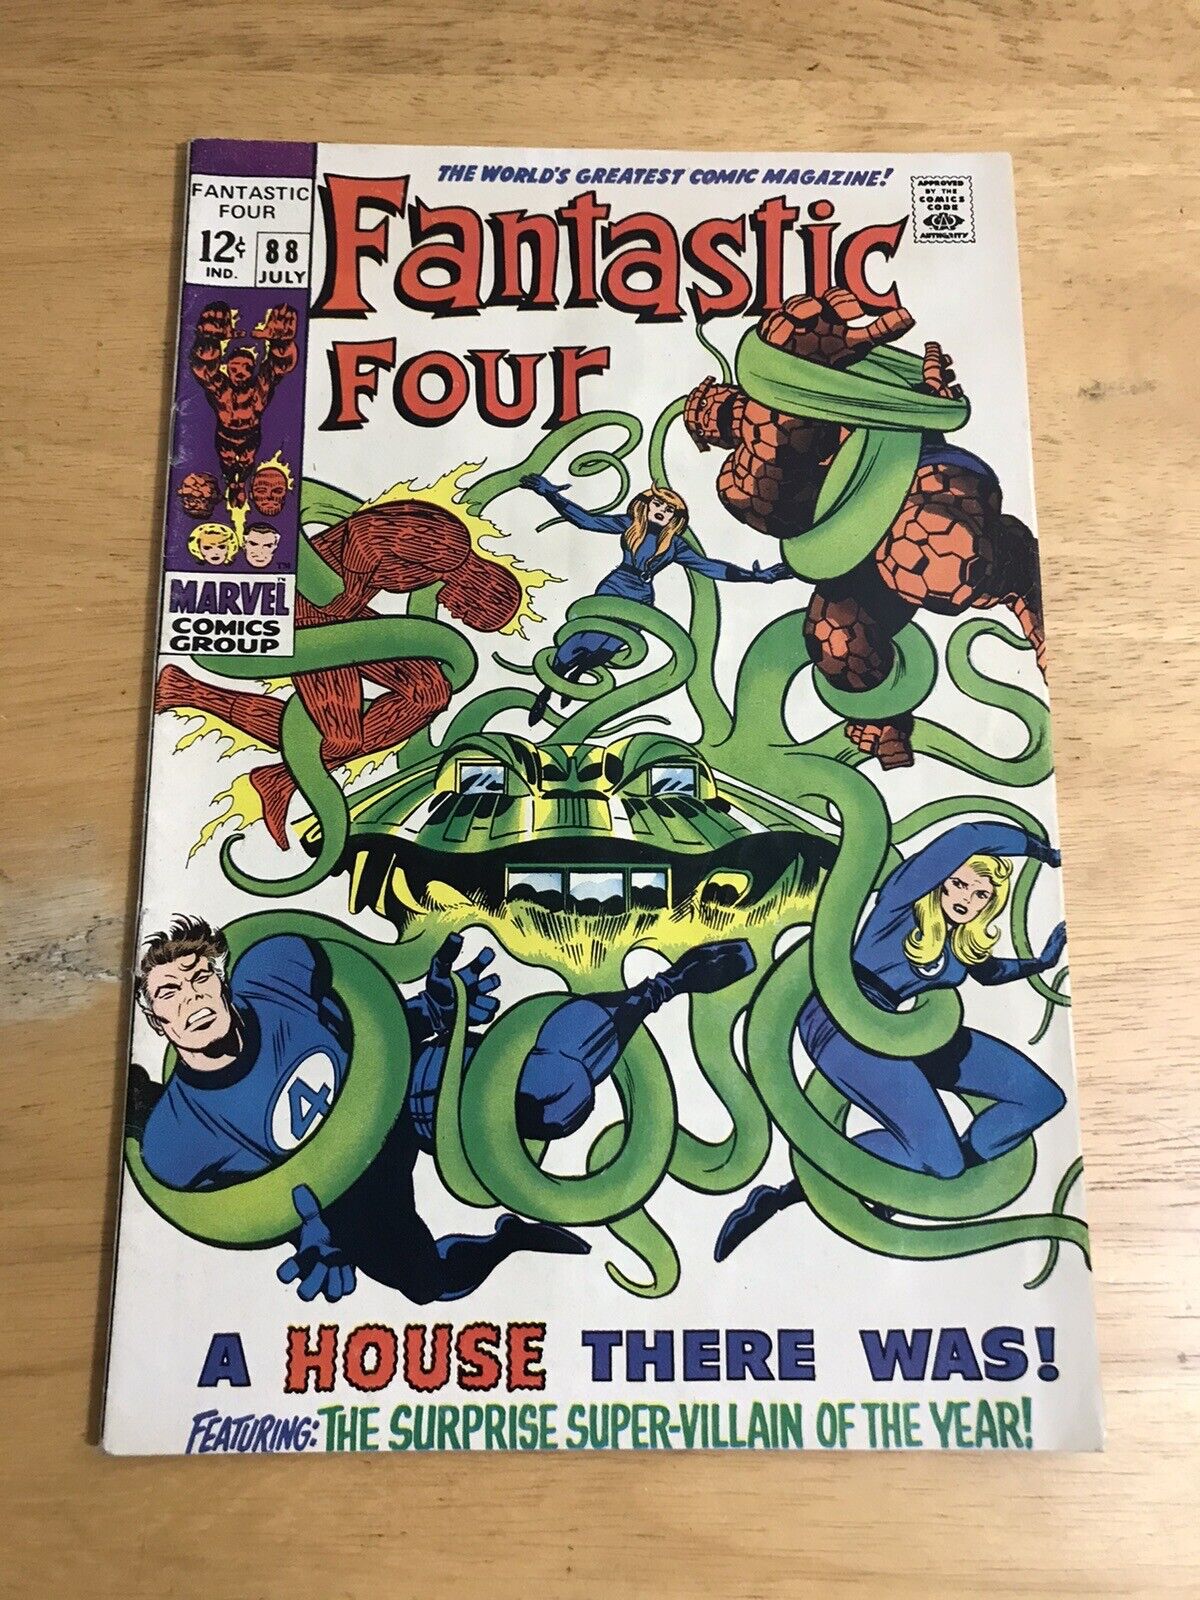 Fantastic Four #88 1969 Mole Man Appearance Stan Lee Story, Jack Kirby Art